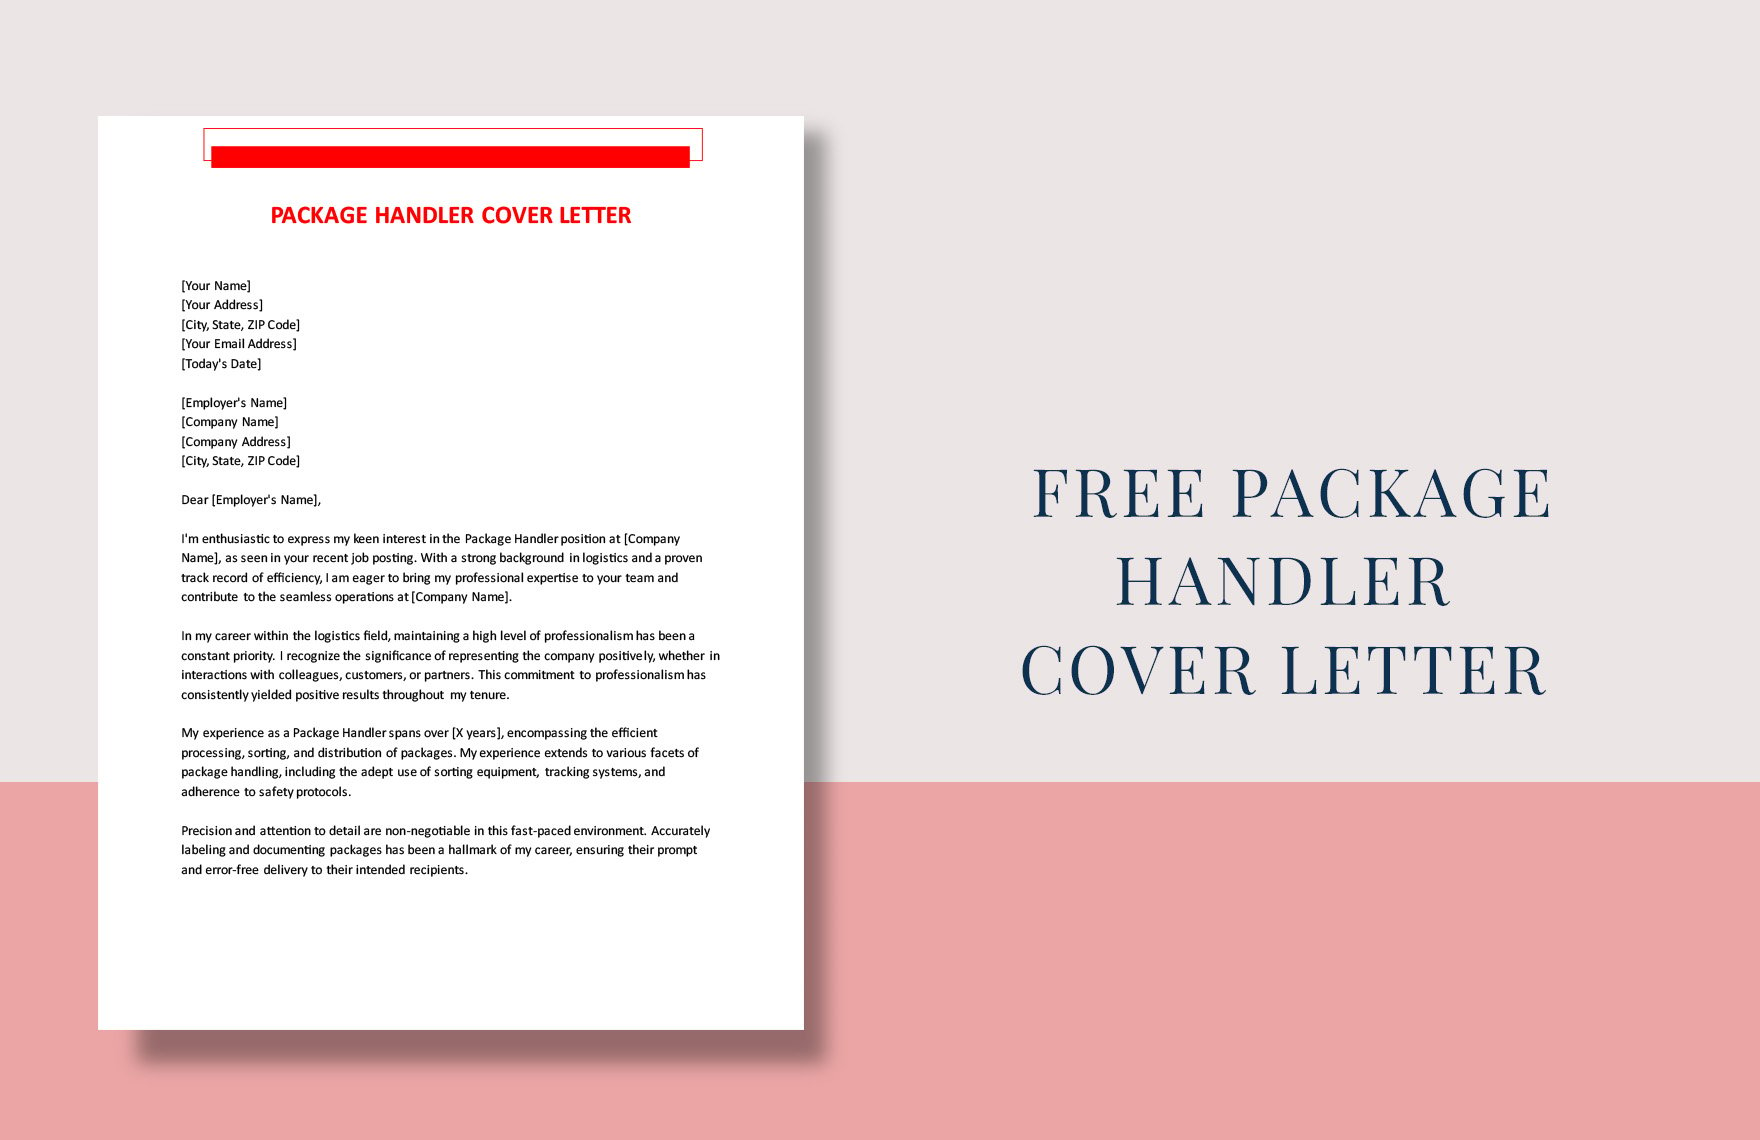 Package Handler Cover Letter in Word, Google Docs, PDF